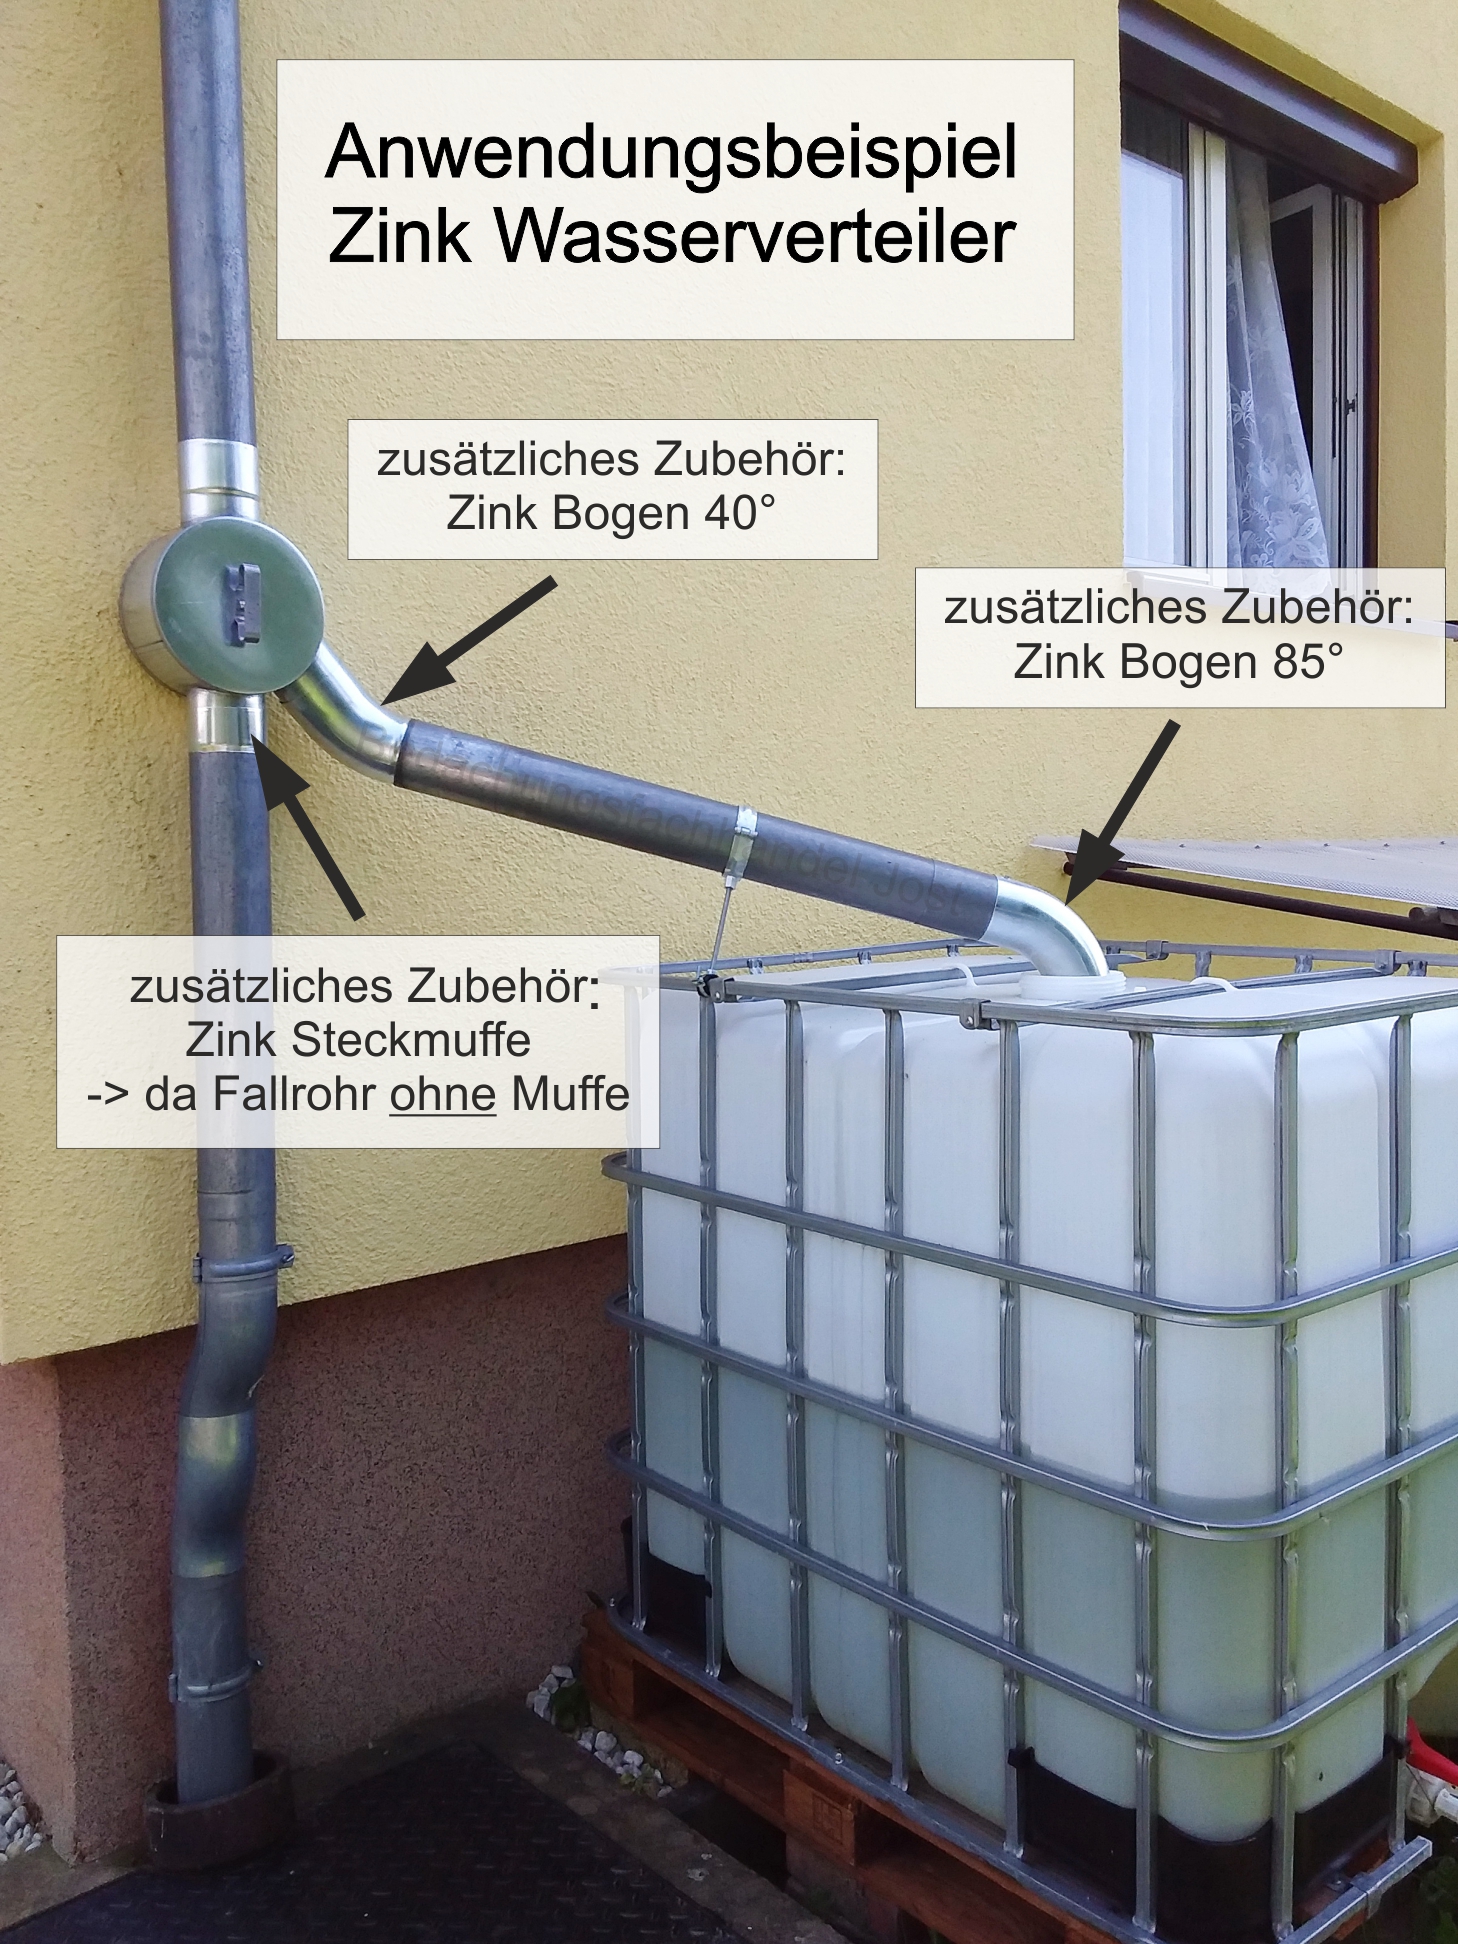 https://cdn03.plentymarkets.com/ai8b96dlnsi2/item/images/406286/full/Fallrohre-Zink-Groemo-Wasserweiche-Wasserverteiler-100-300.jpg